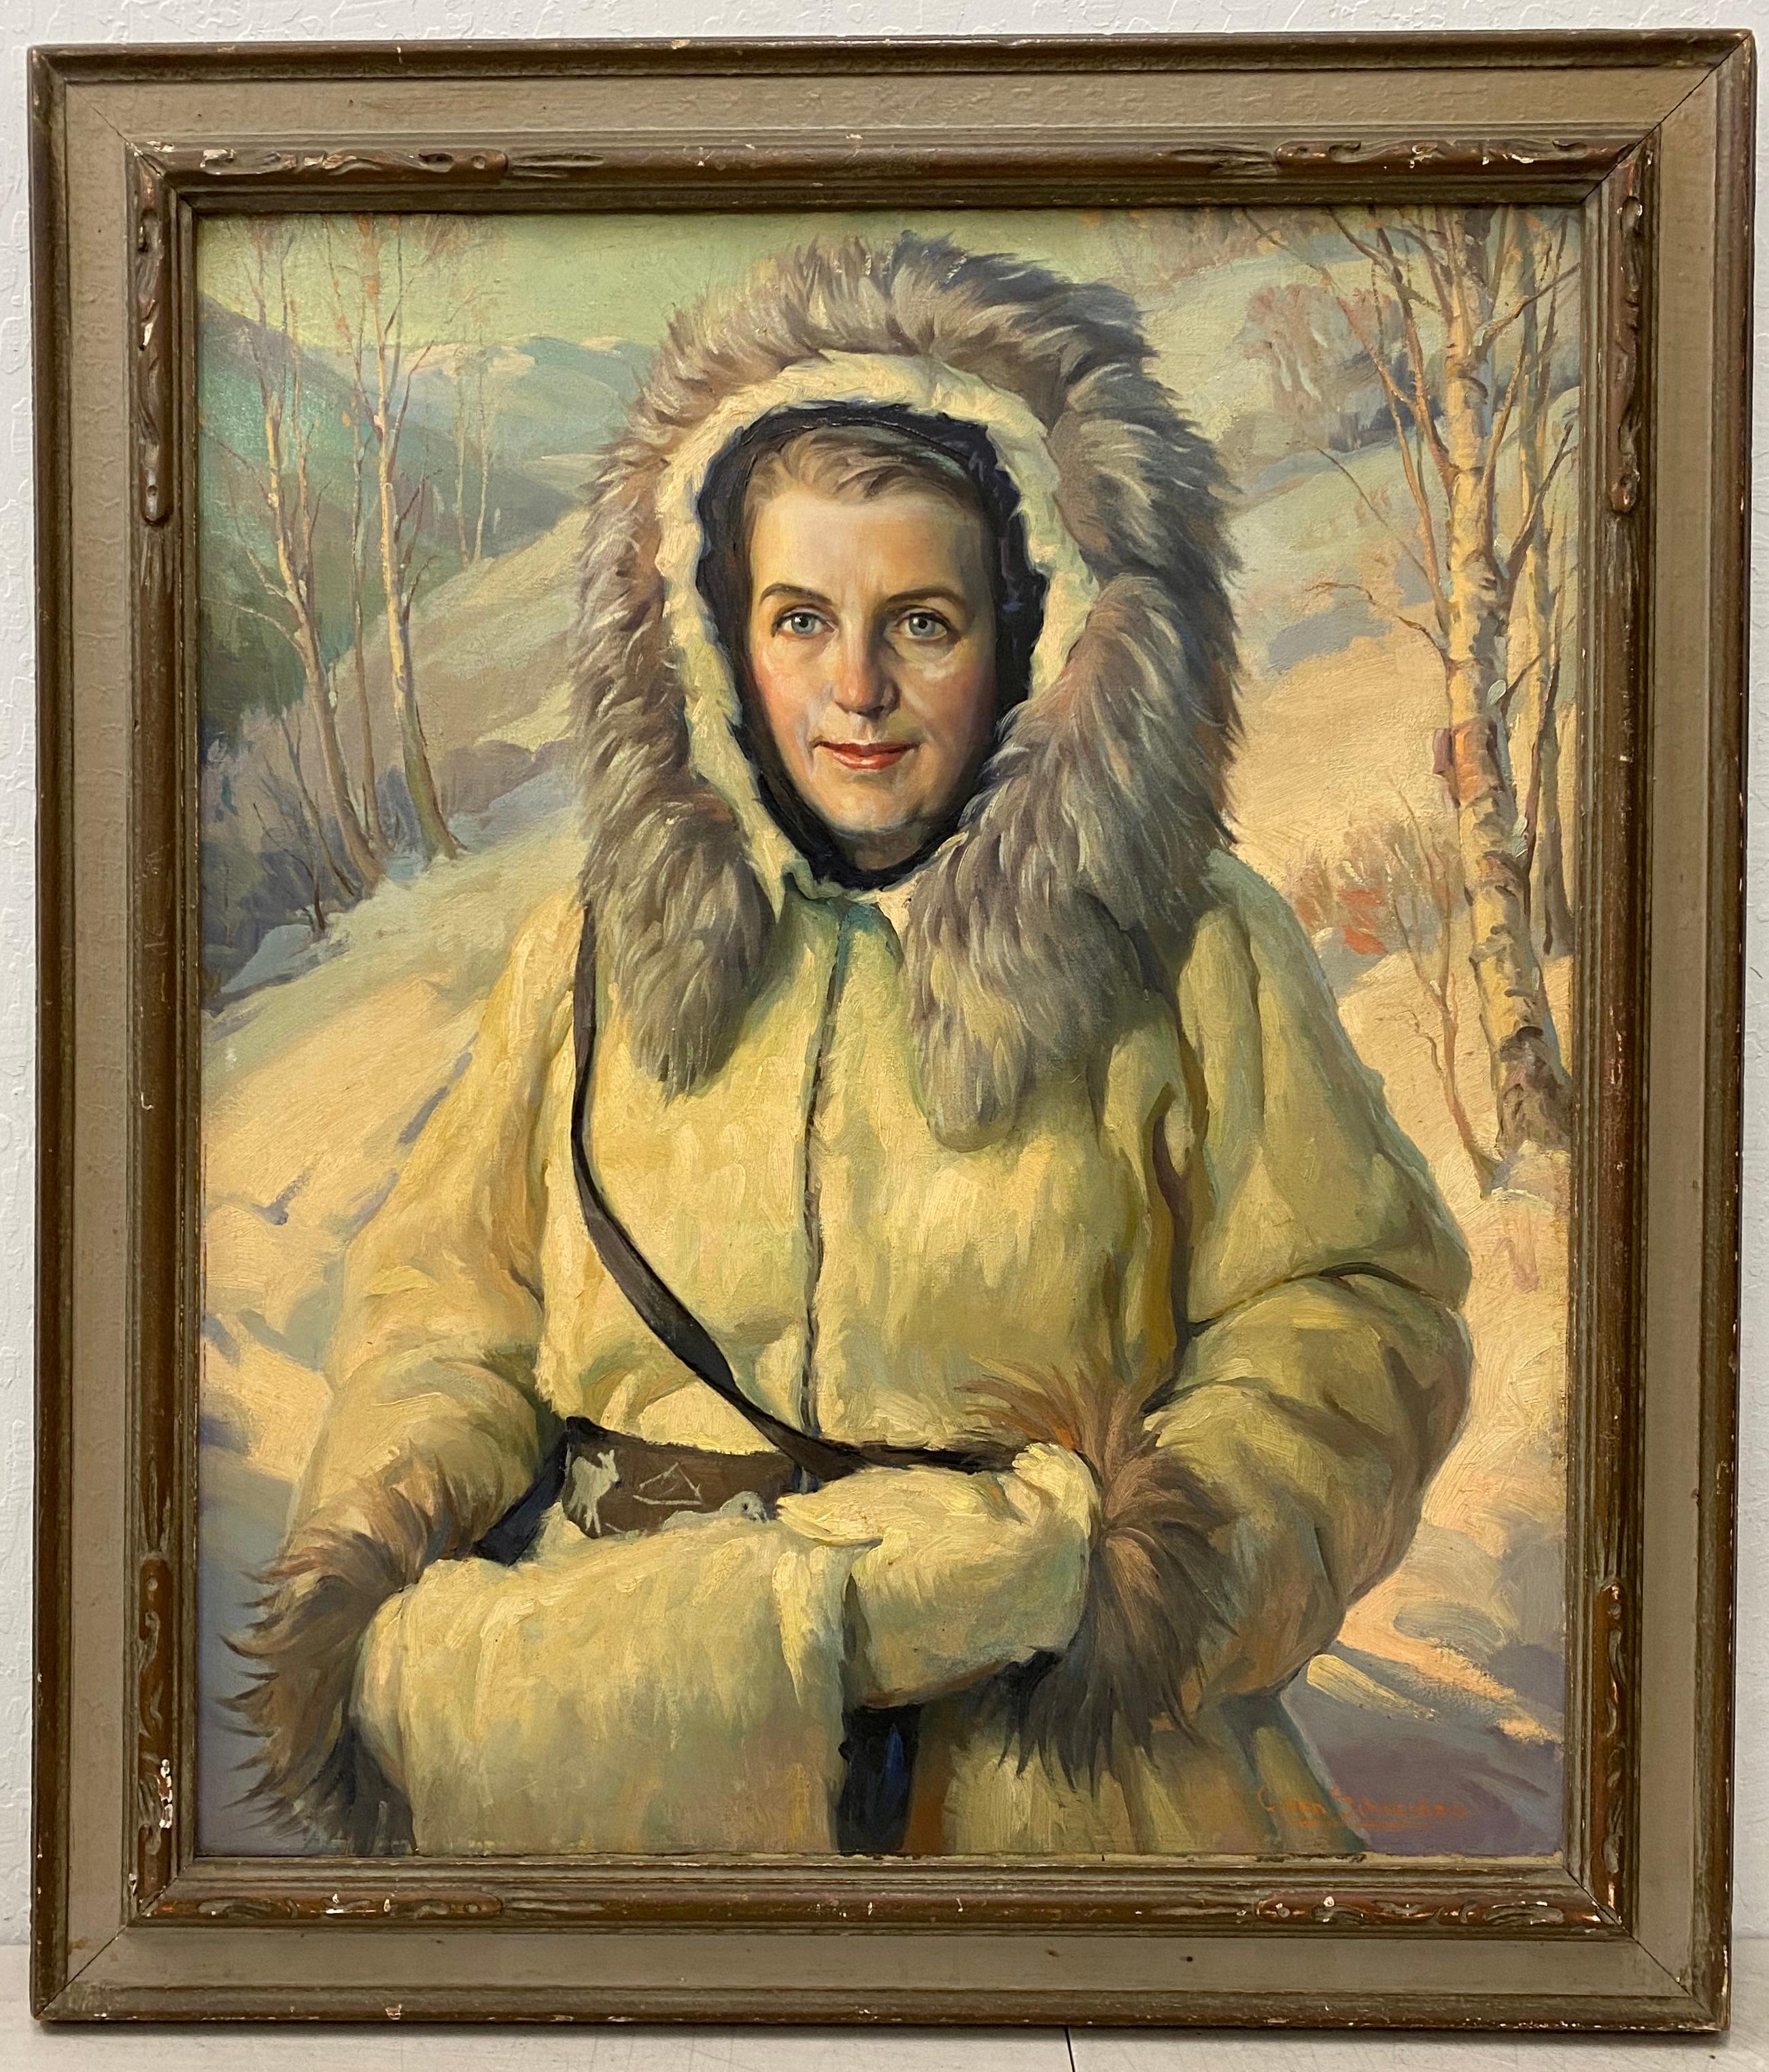 Christian von Schneidau Portrait Painting - Christian Von Schneidau "The White Parka, Alaska" Original Oil Painting C.1961